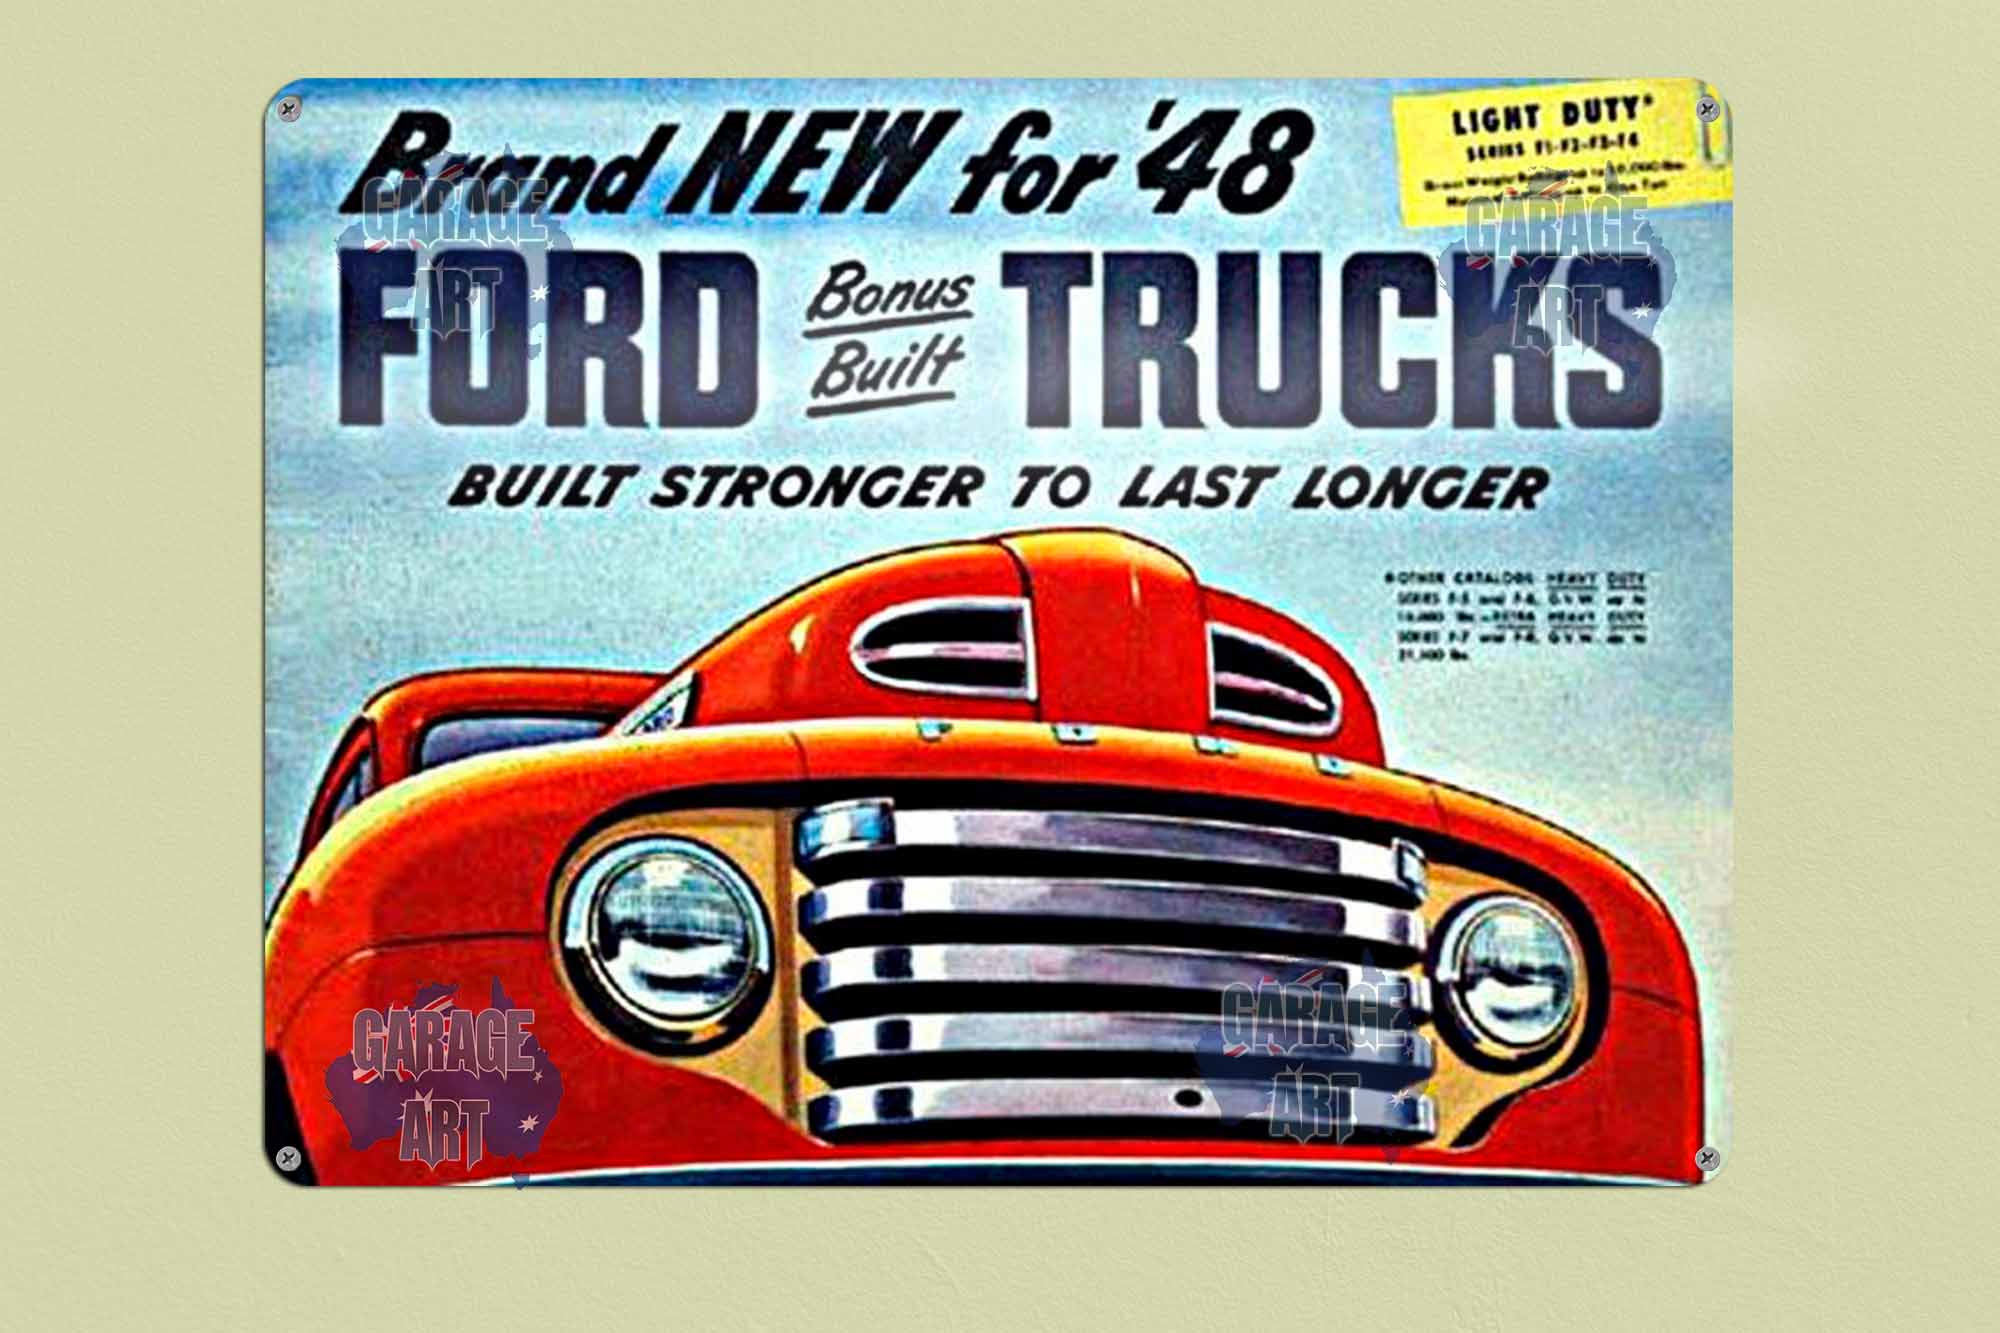 Ford 1948 Trucks Light Duty Tin Sign freeshipping - garageartaustralia